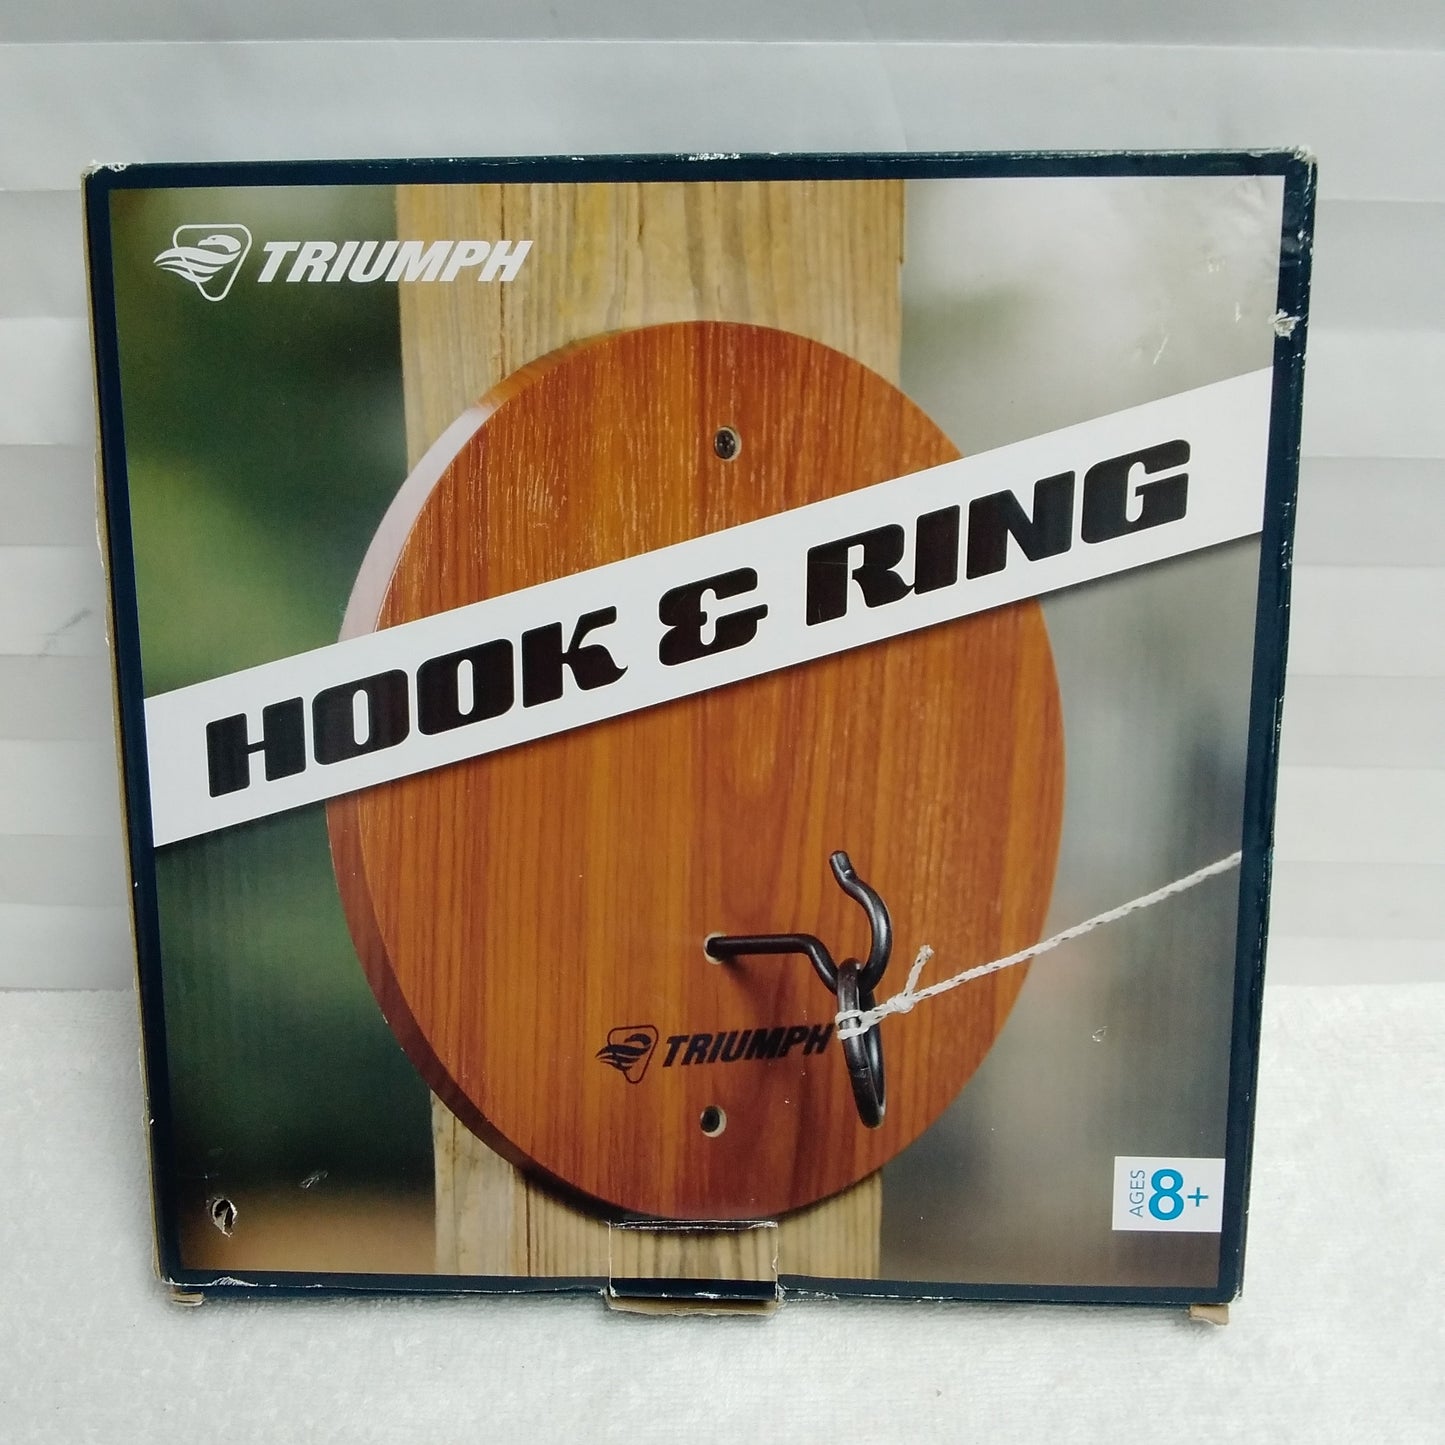 NIB - Triumph Hook & Ring Set (Damaged Box)